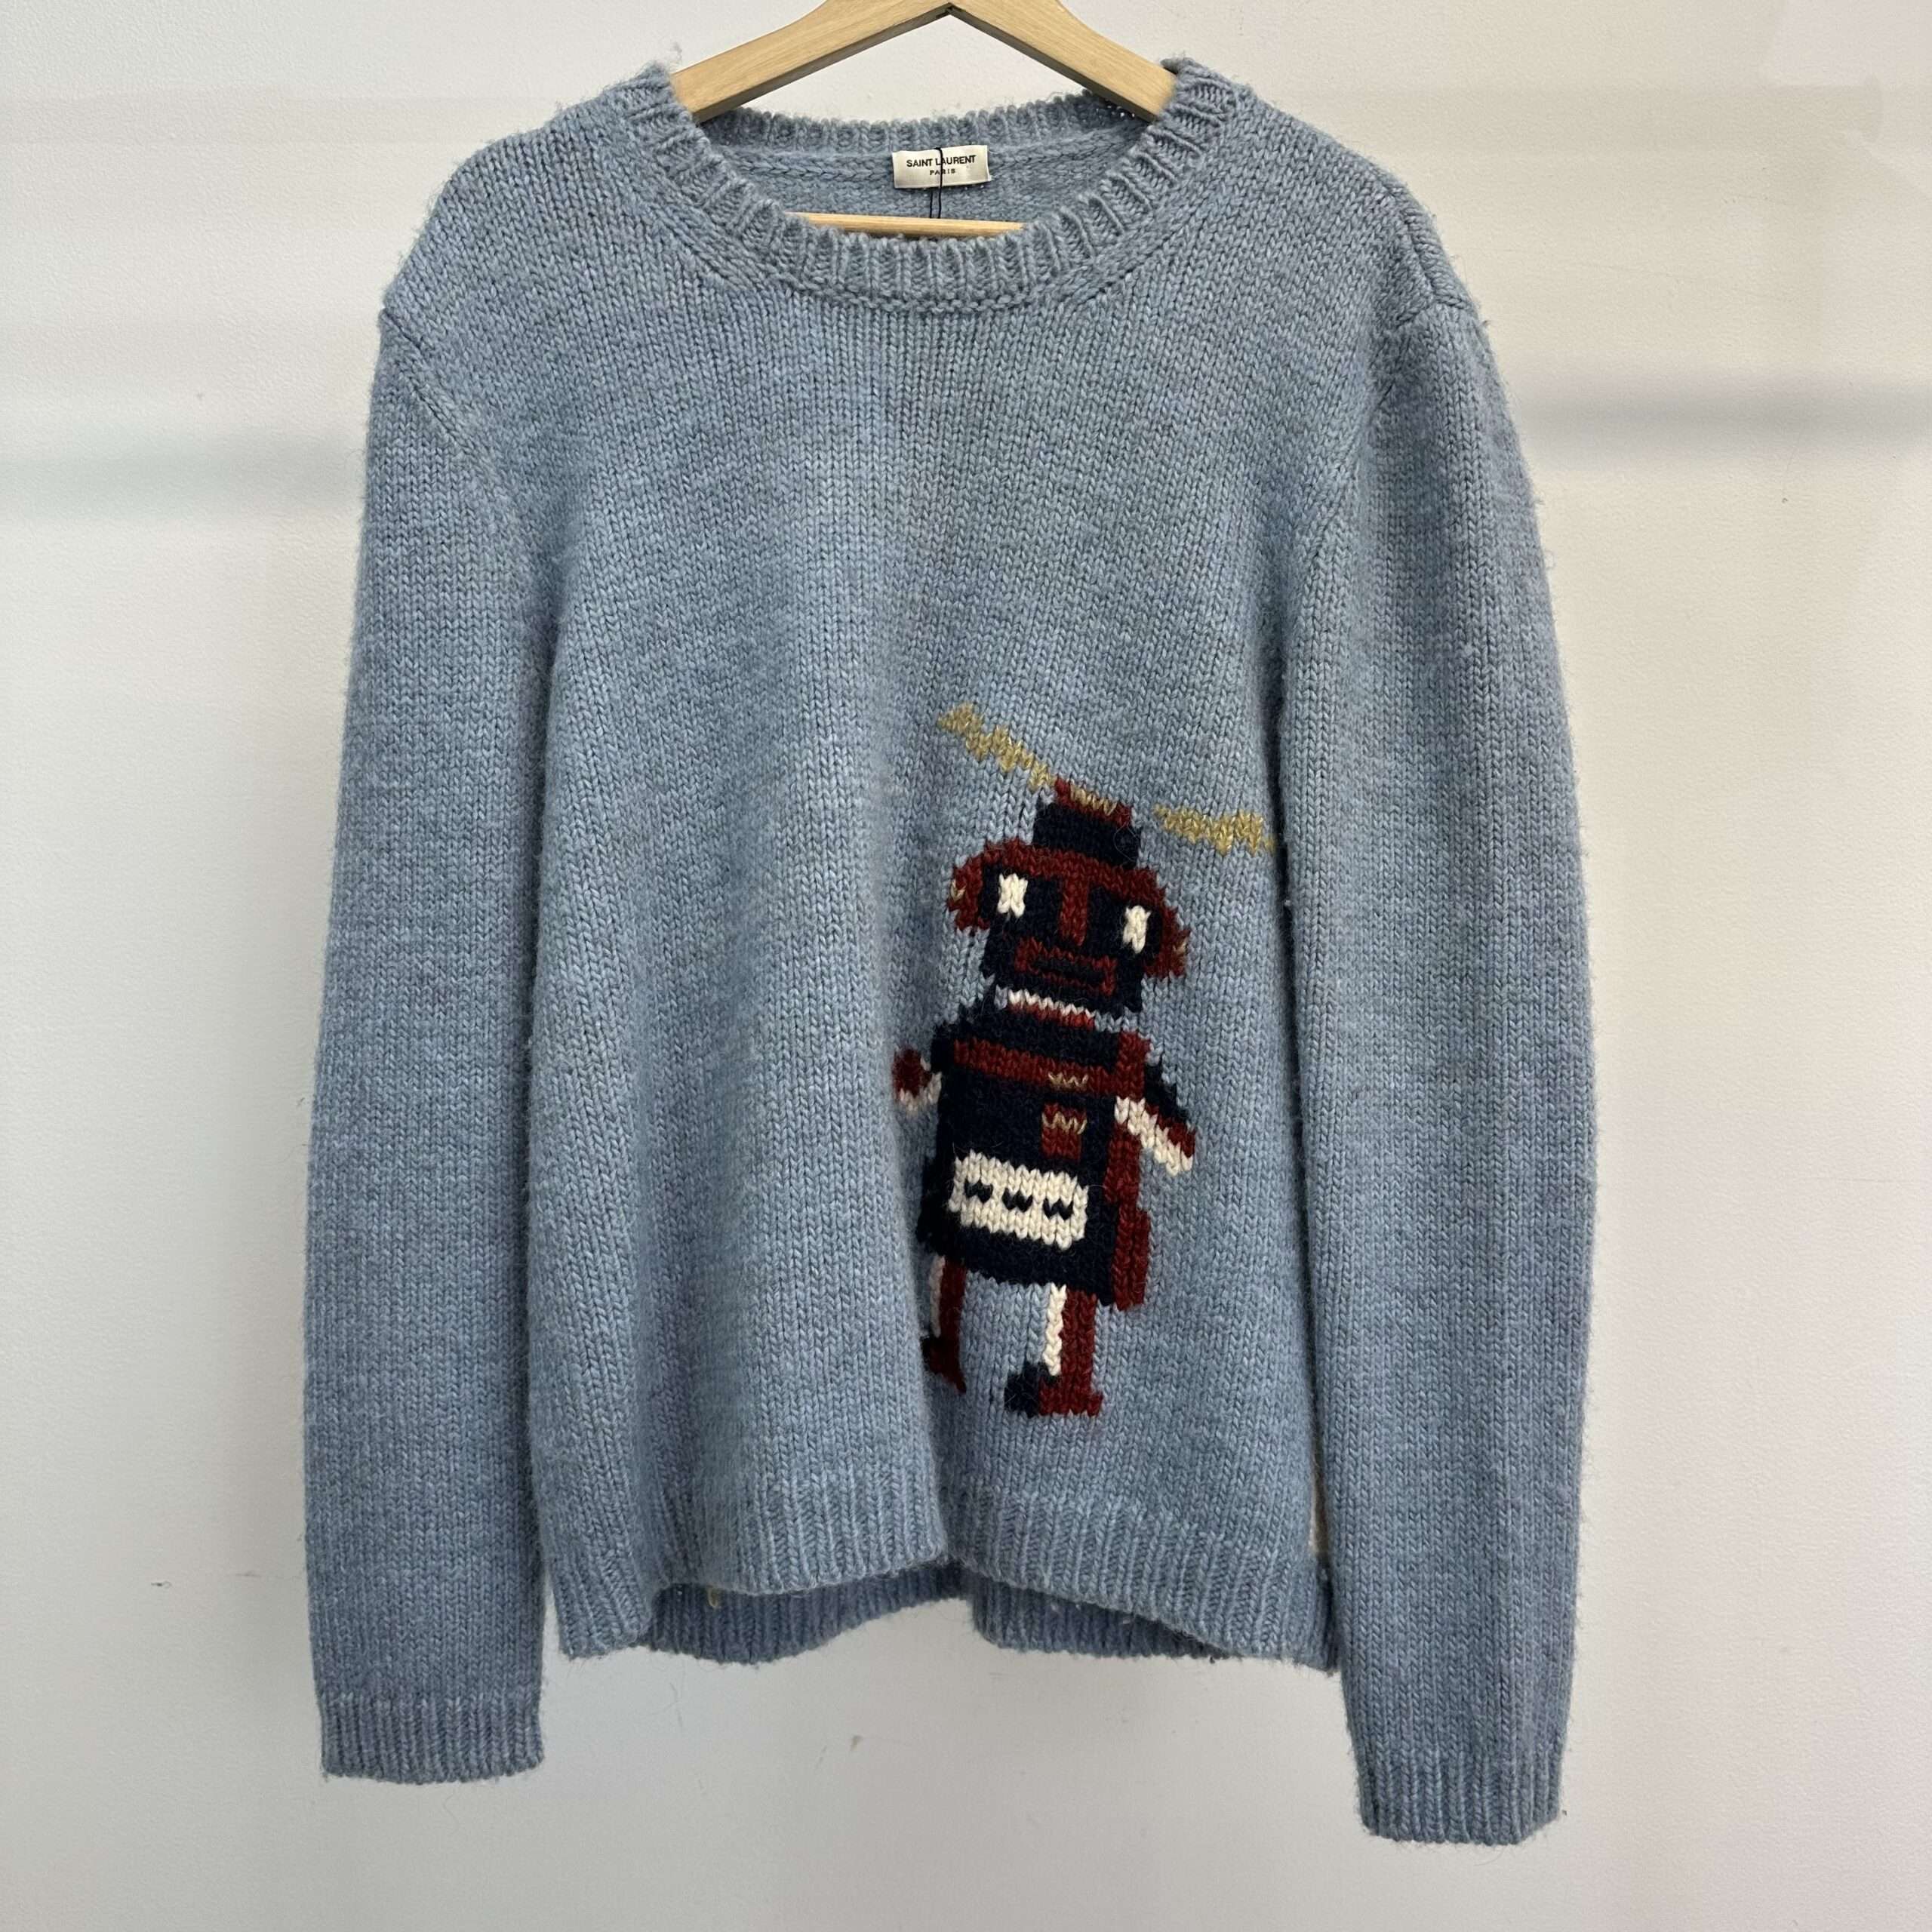 Saint Laurent 'Robot' Sweater - Veblen